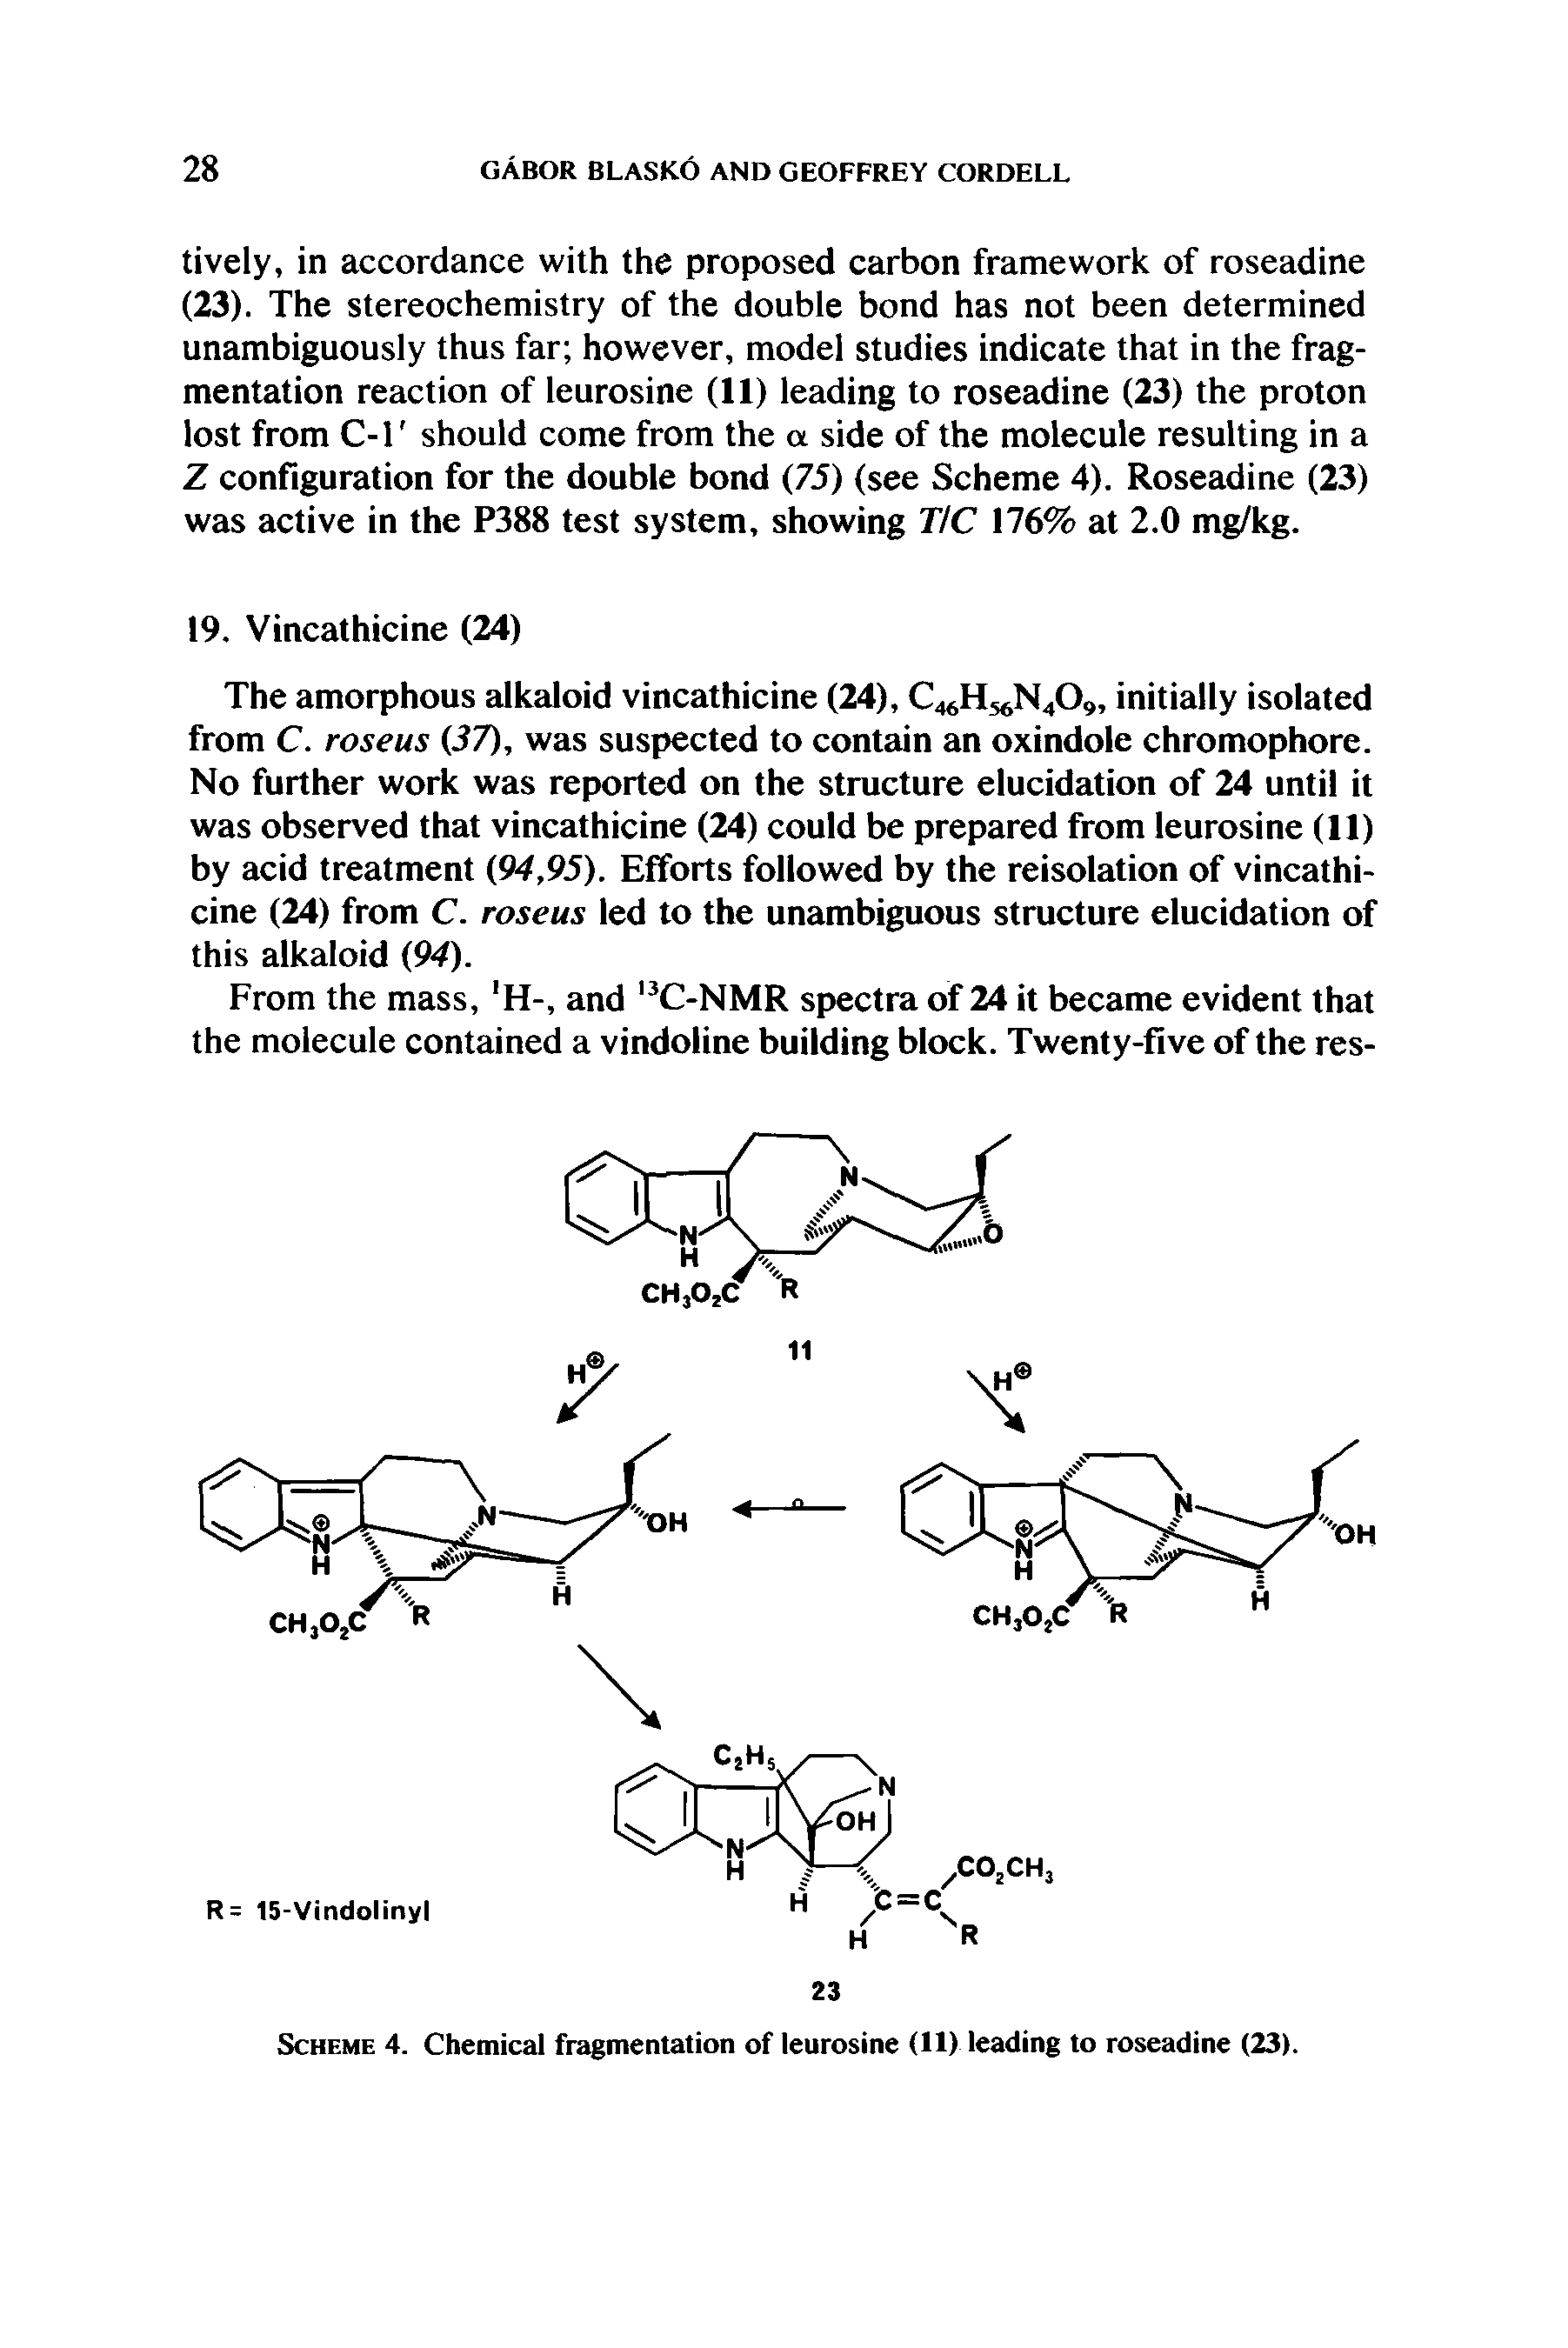 Scheme 4. Chemical fragmentation of leurosine (11) leading to roseadine (23).